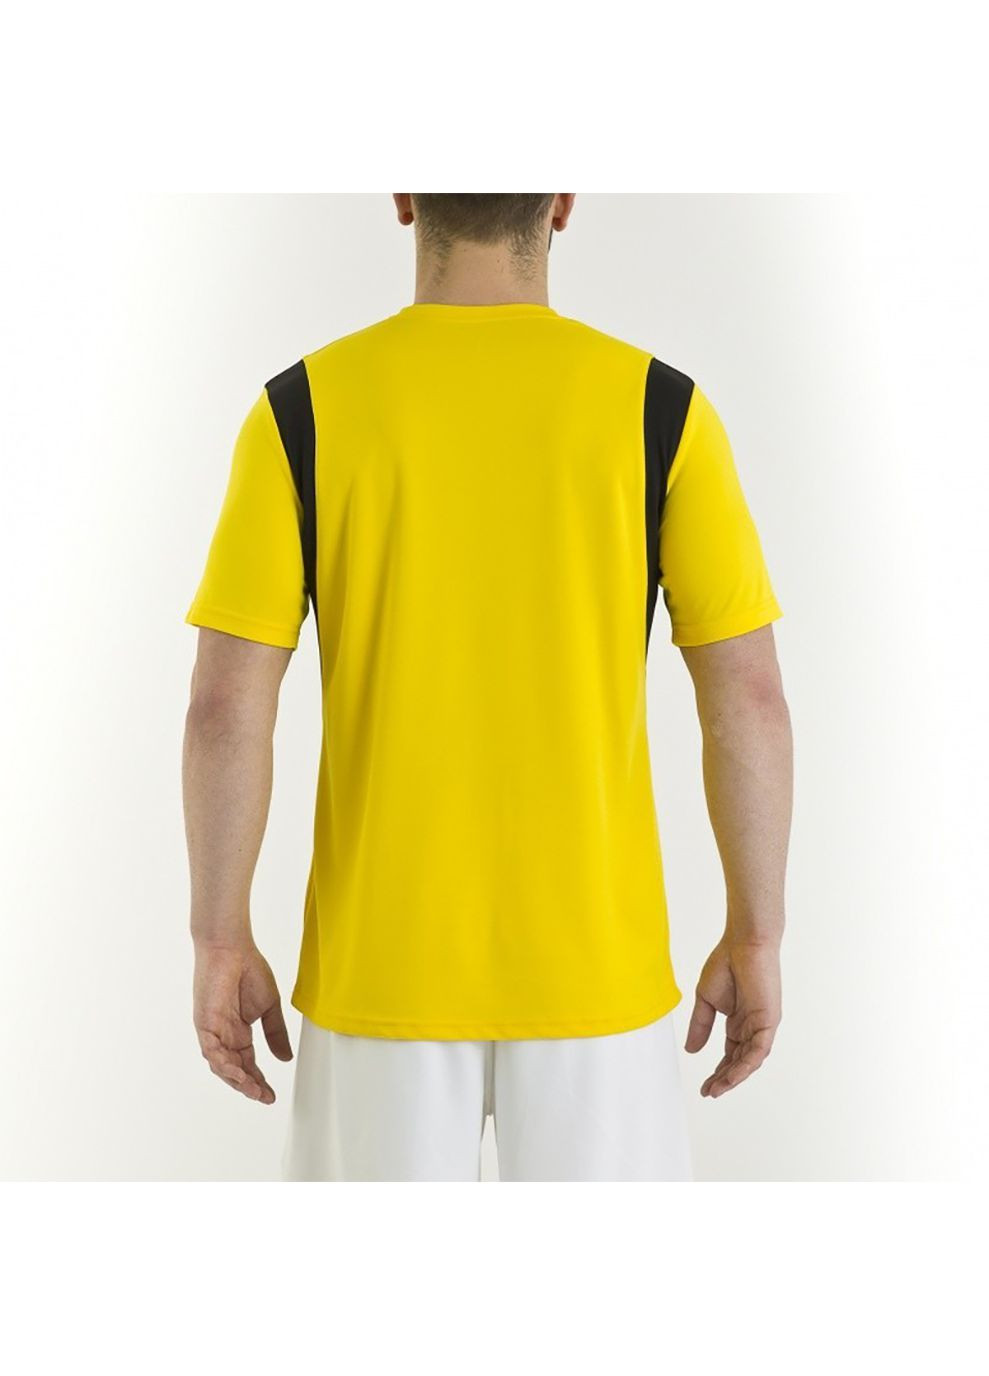 Жовта футболка t-shirt dinamo yellow s/s жовтий 100446.900 Joma